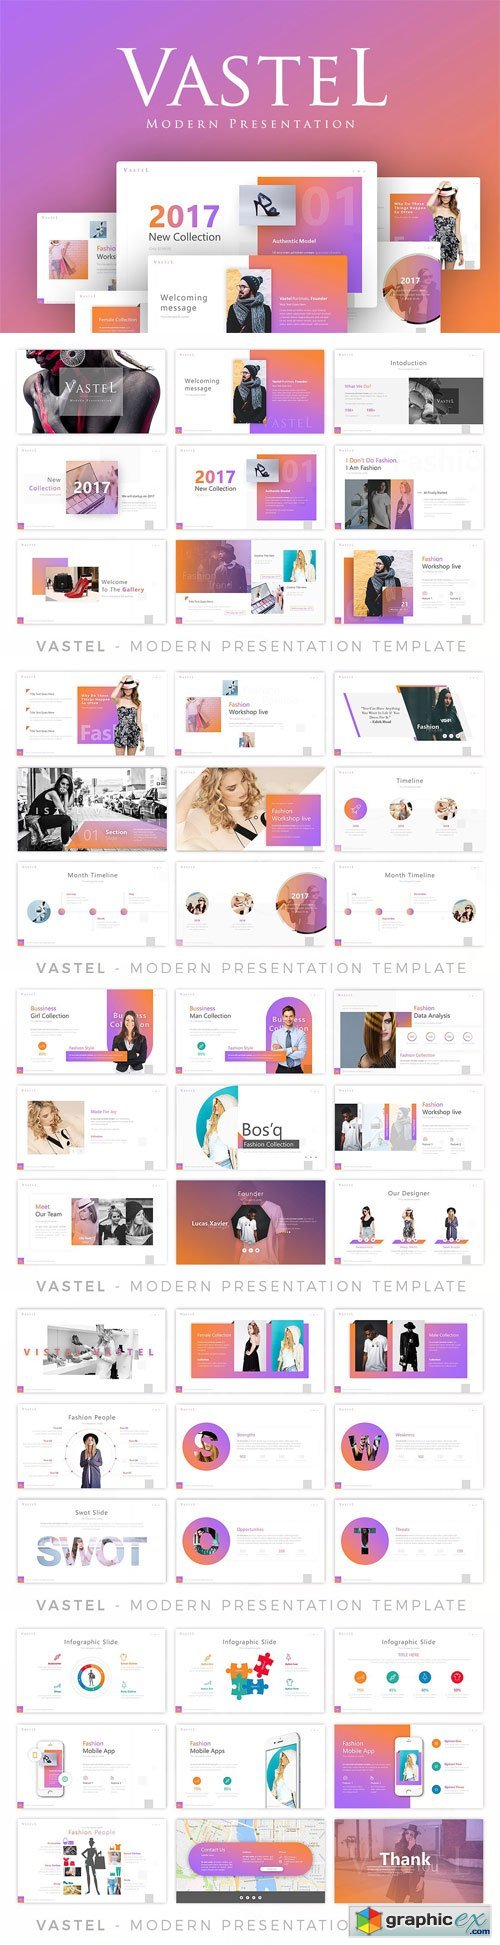 Vastel - Modern Presentation